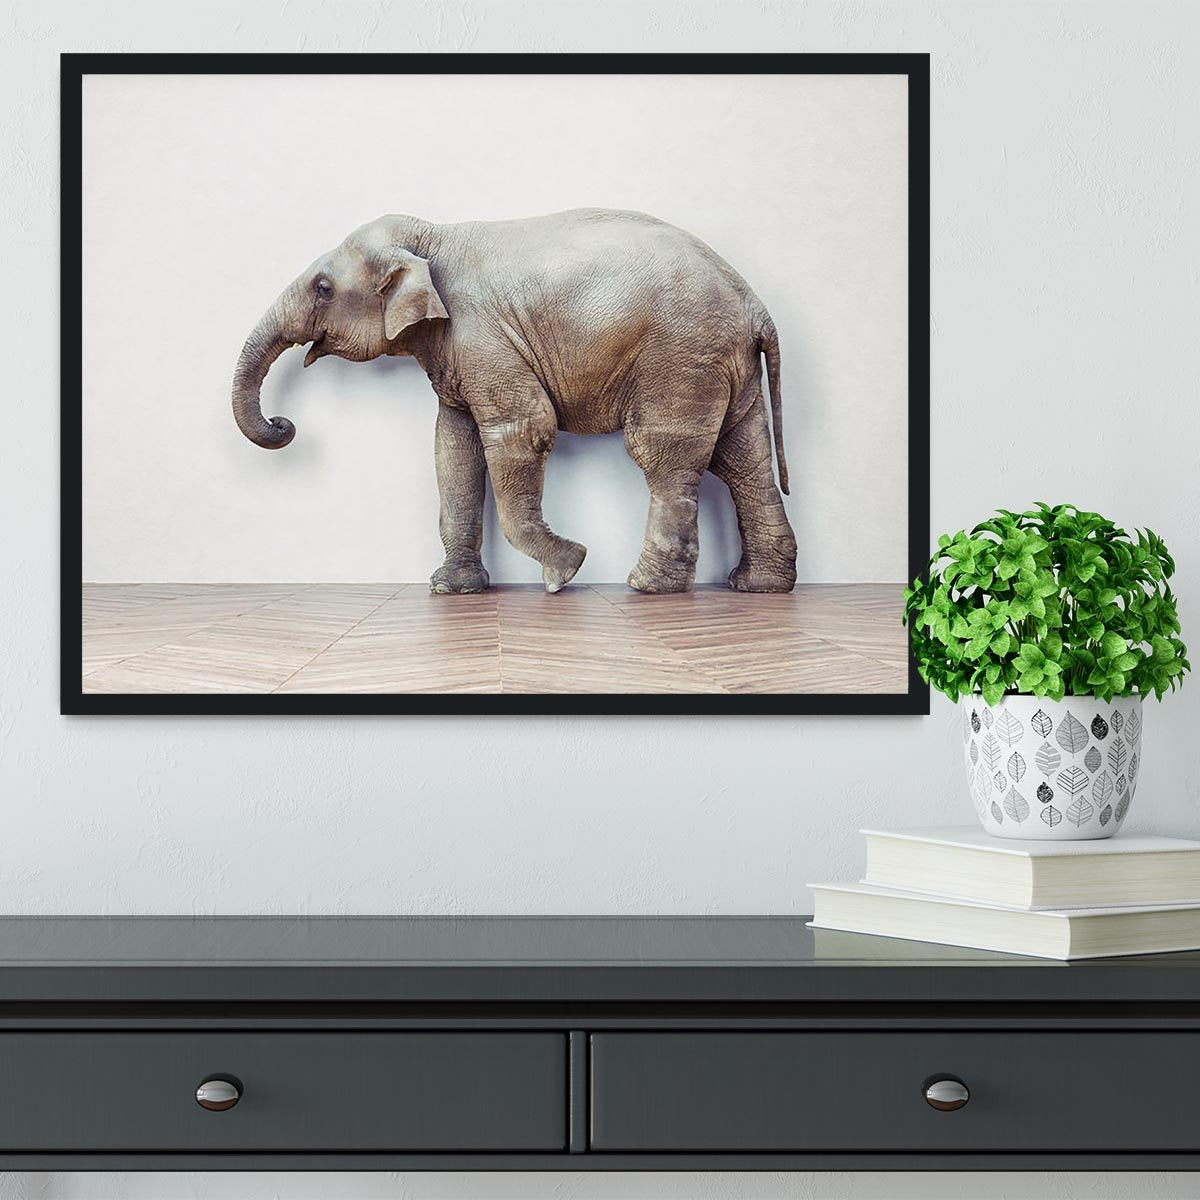 The elephant calm in the room near white wall Framed Print - Canvas Art Rocks - 2